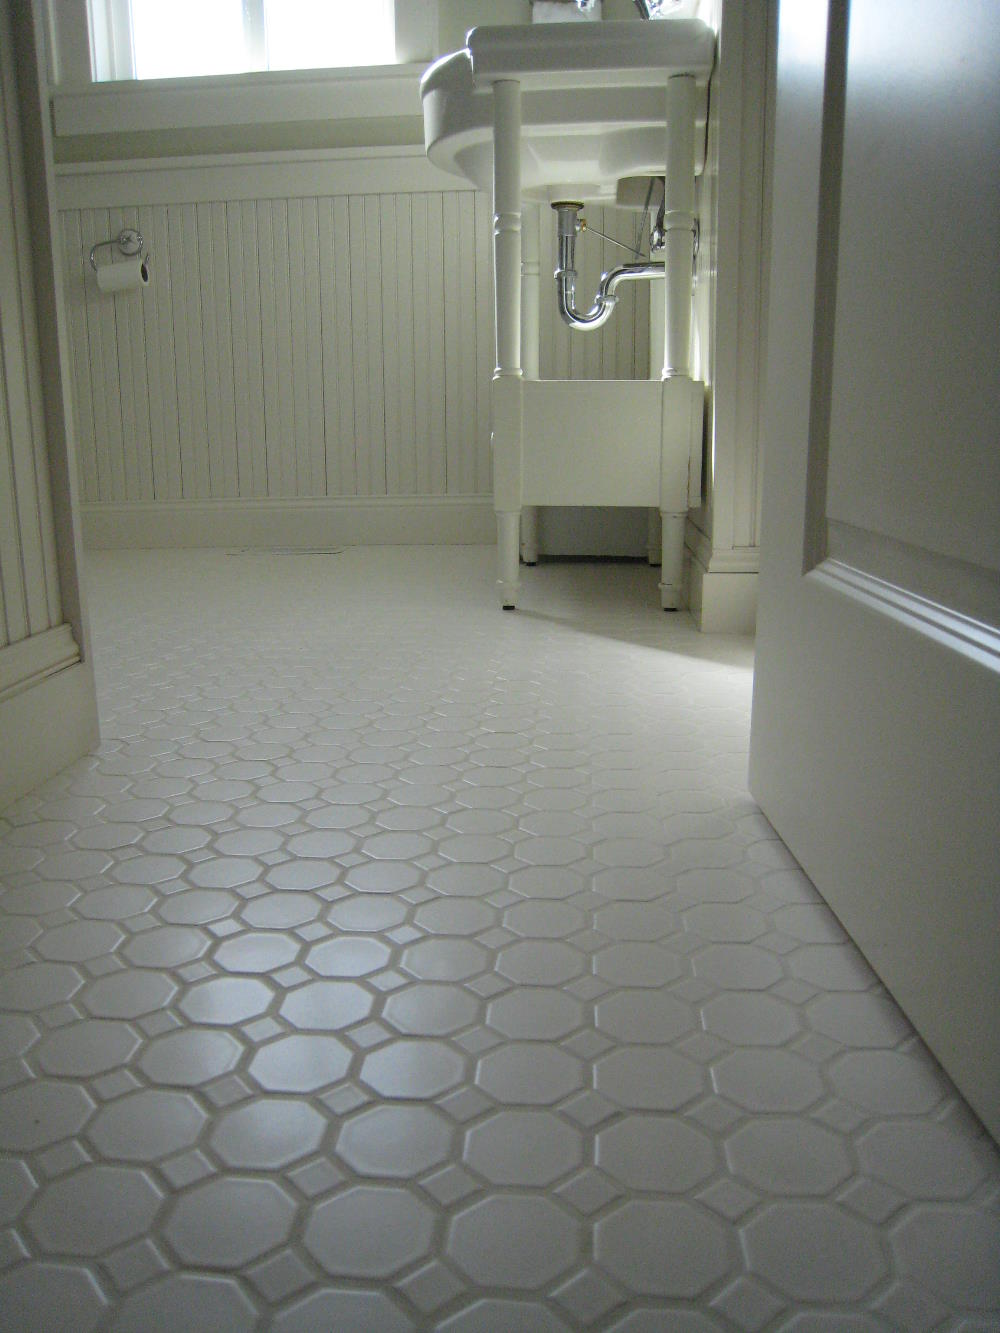 tile floor bathroom antique bathrooms tiles flooring floors bath tiled bad laminate classic vinyl sheet 1333 awesome 1000 decor pattern